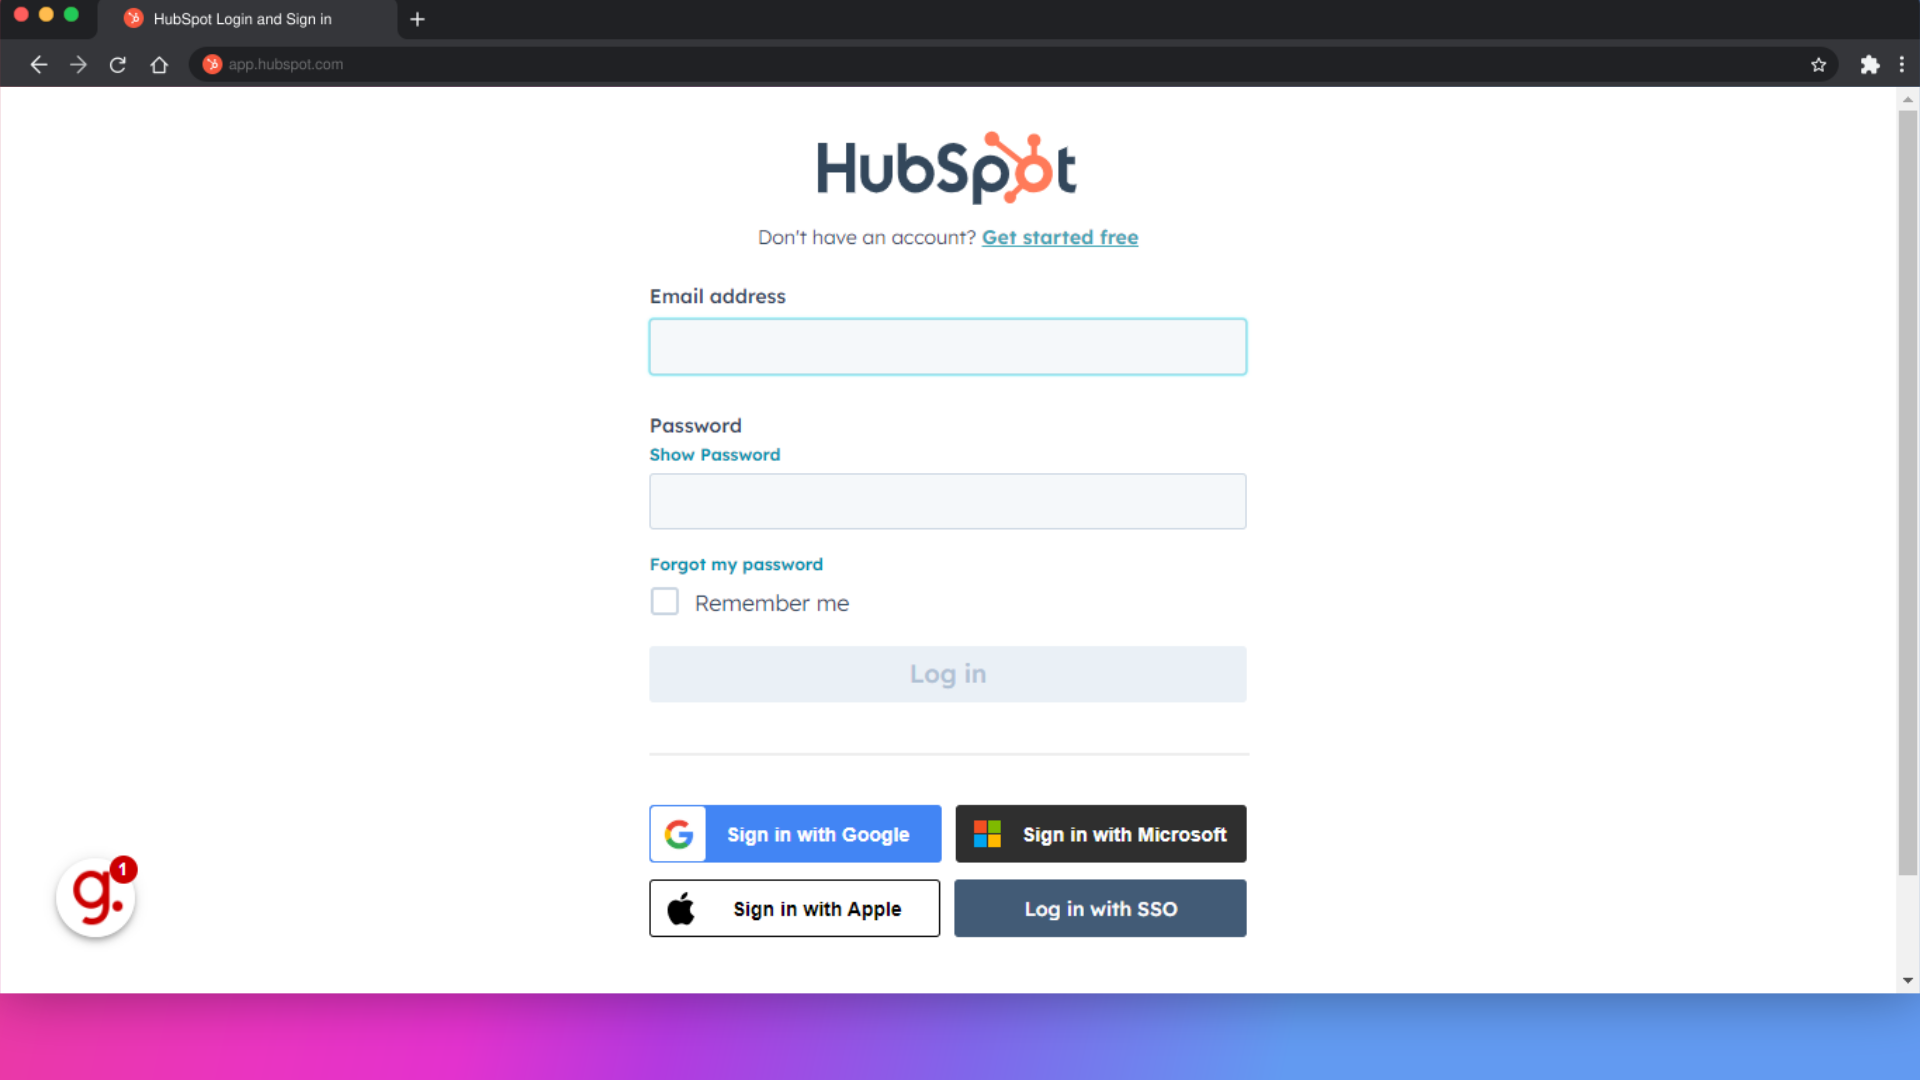 Switch to 'app.hubspot.com'